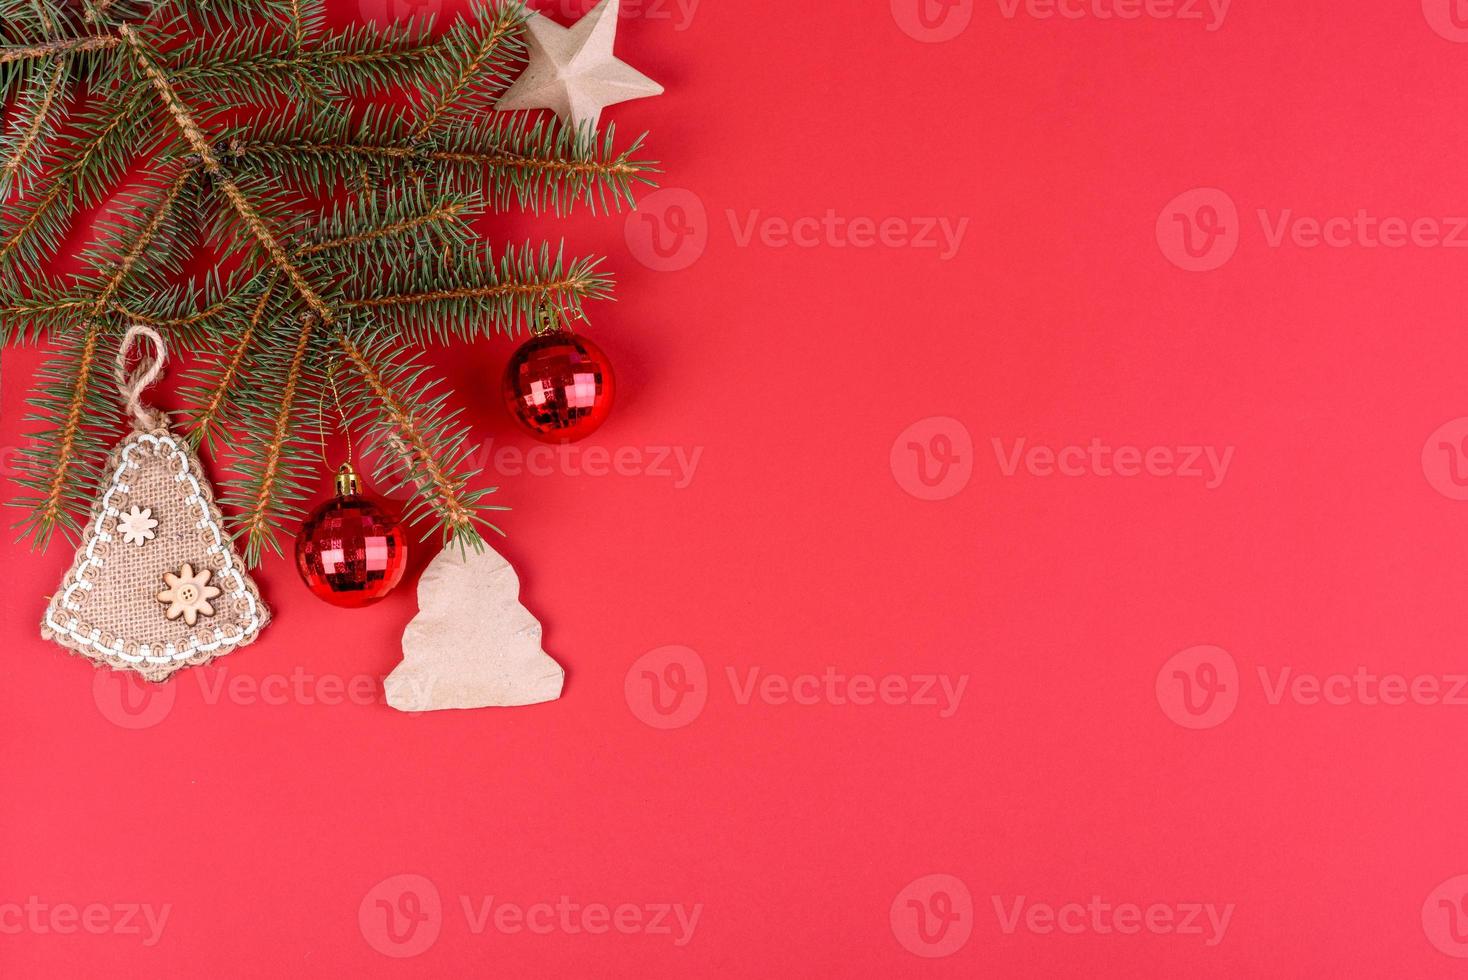 adornos navideños rojos, ramas de abeto sobre fondo rojo foto